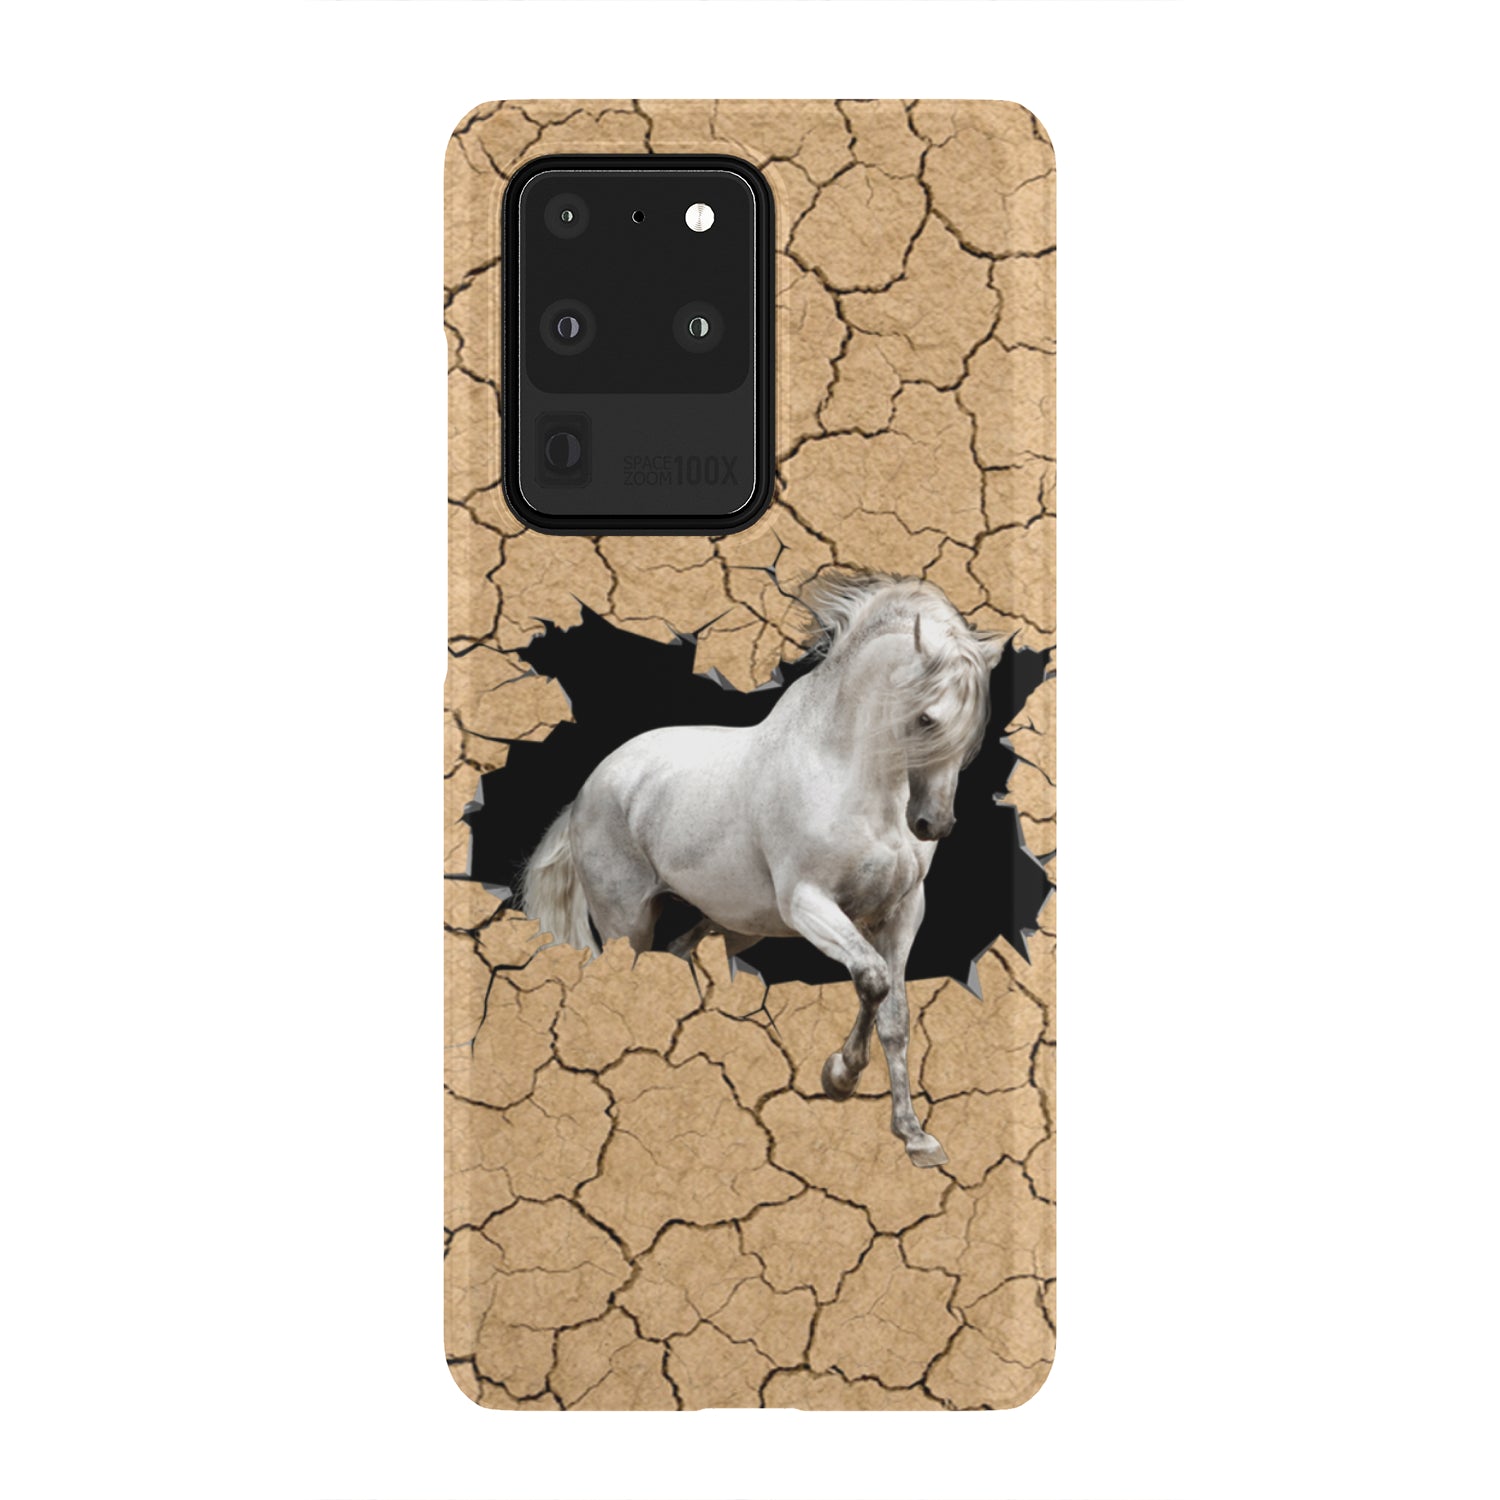 Powwow Store gb nat00503 03 white horse native phone case